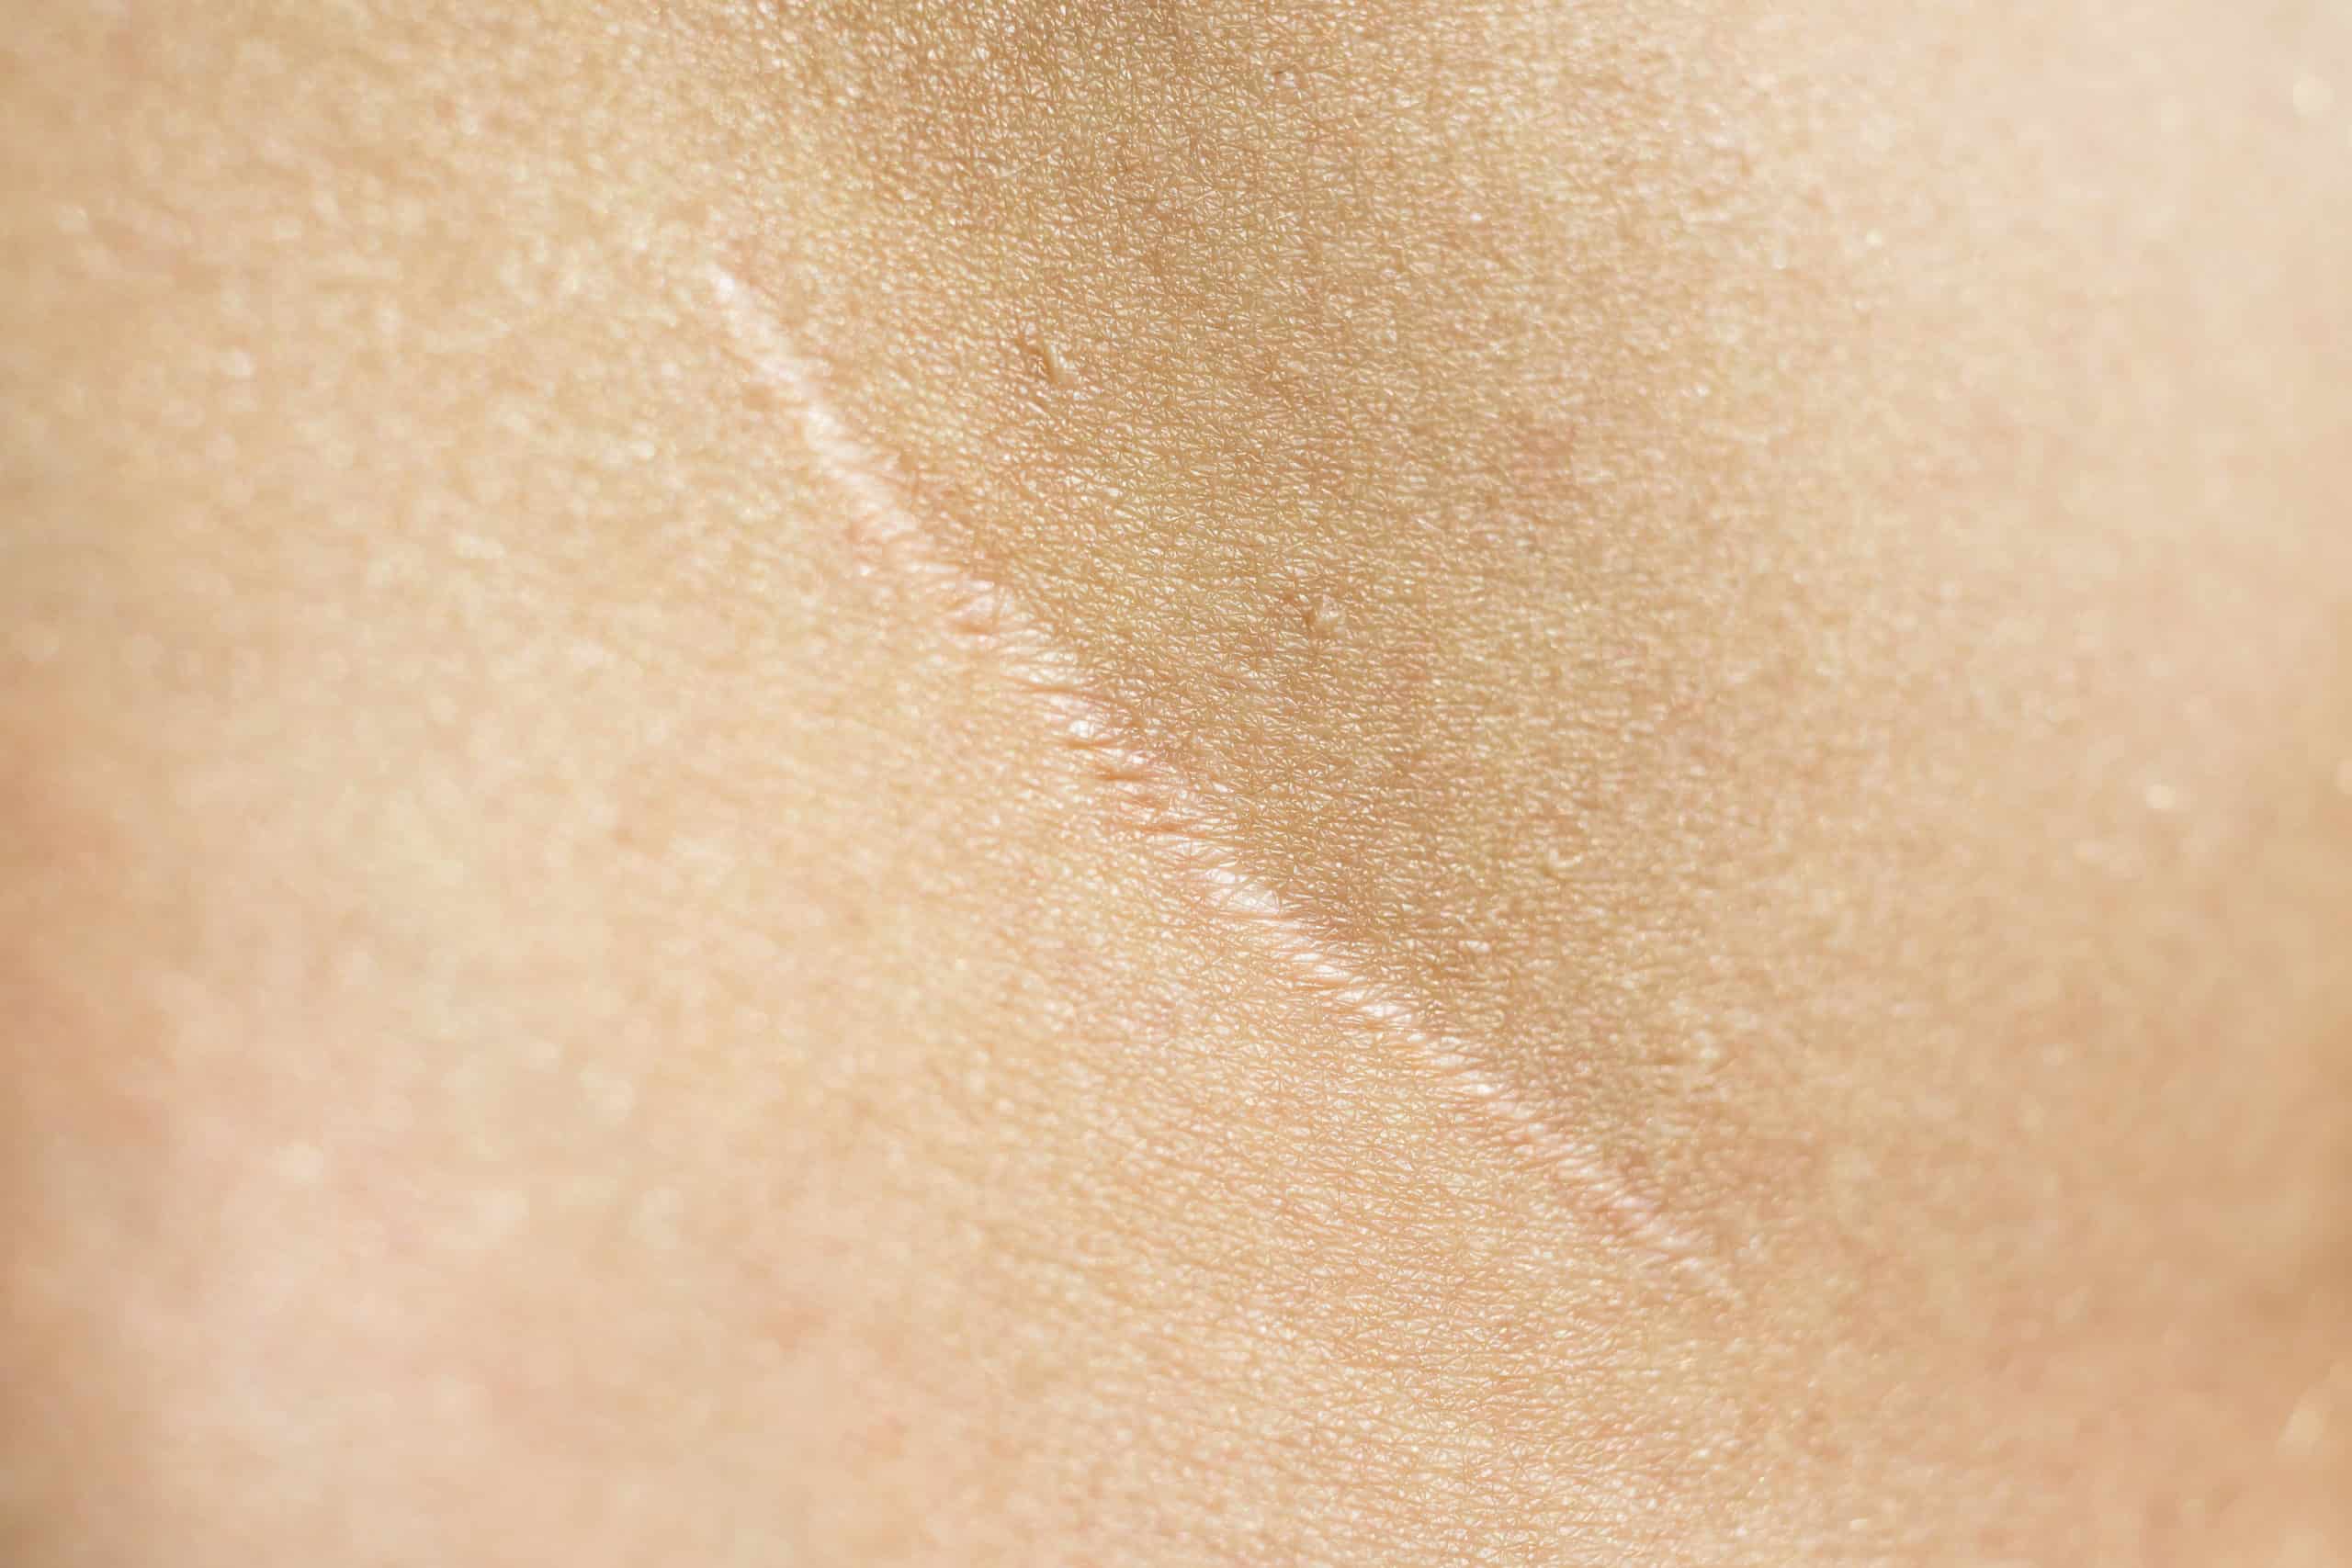 Skin - Scar